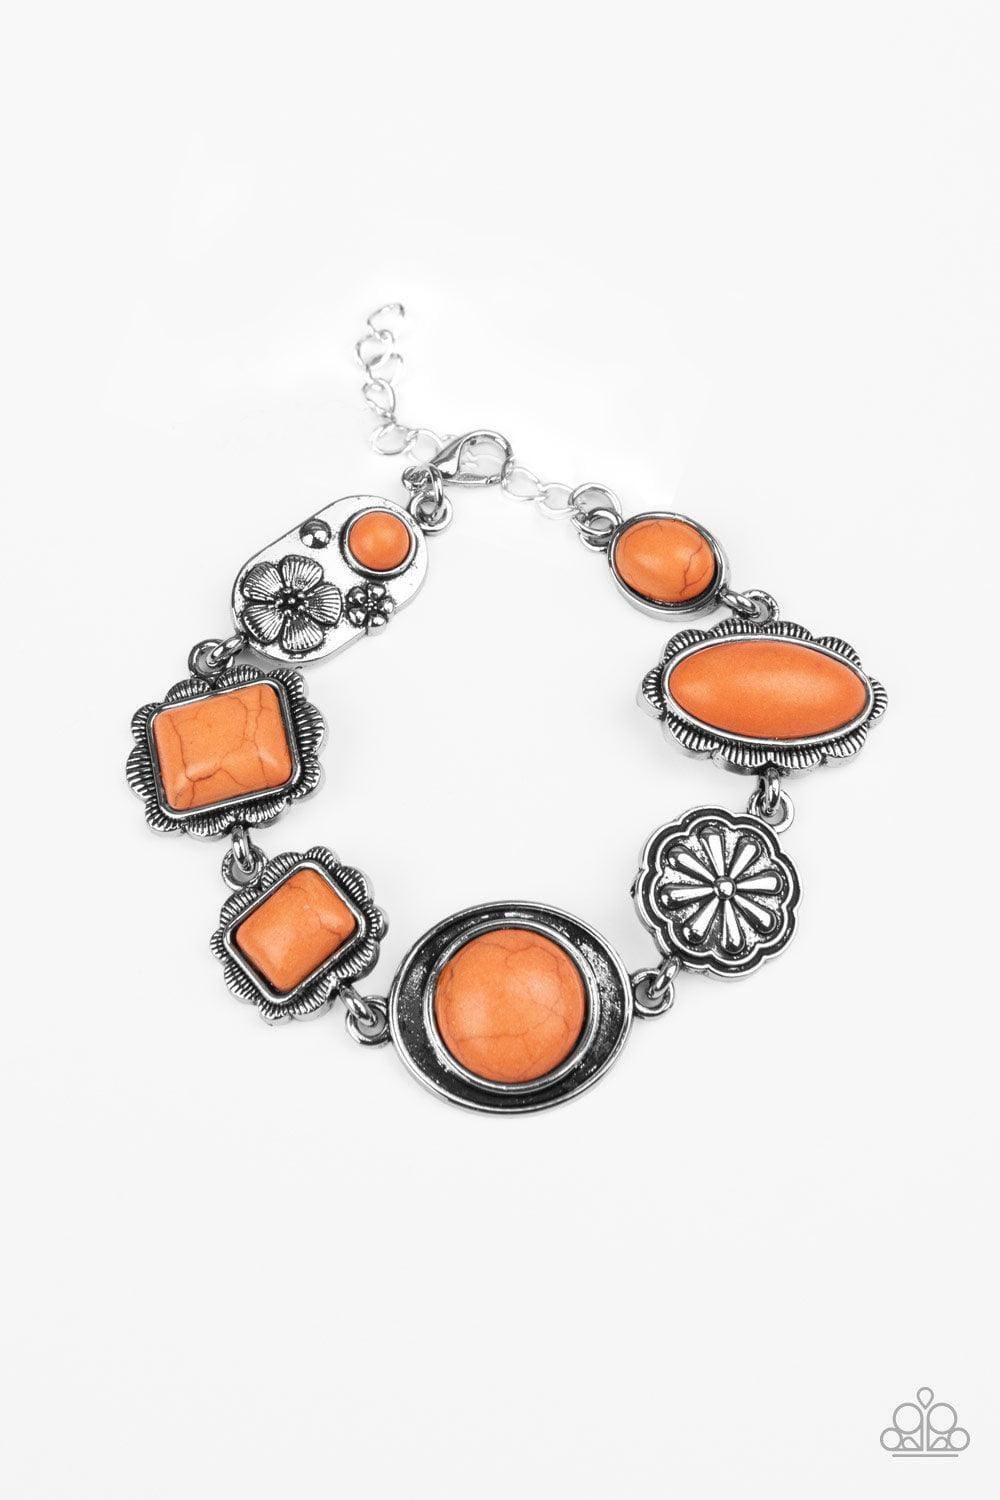 Paparazzi Accessories - Gorgeously Groundskeeper - Orange Bracelet - Bling by JessieK